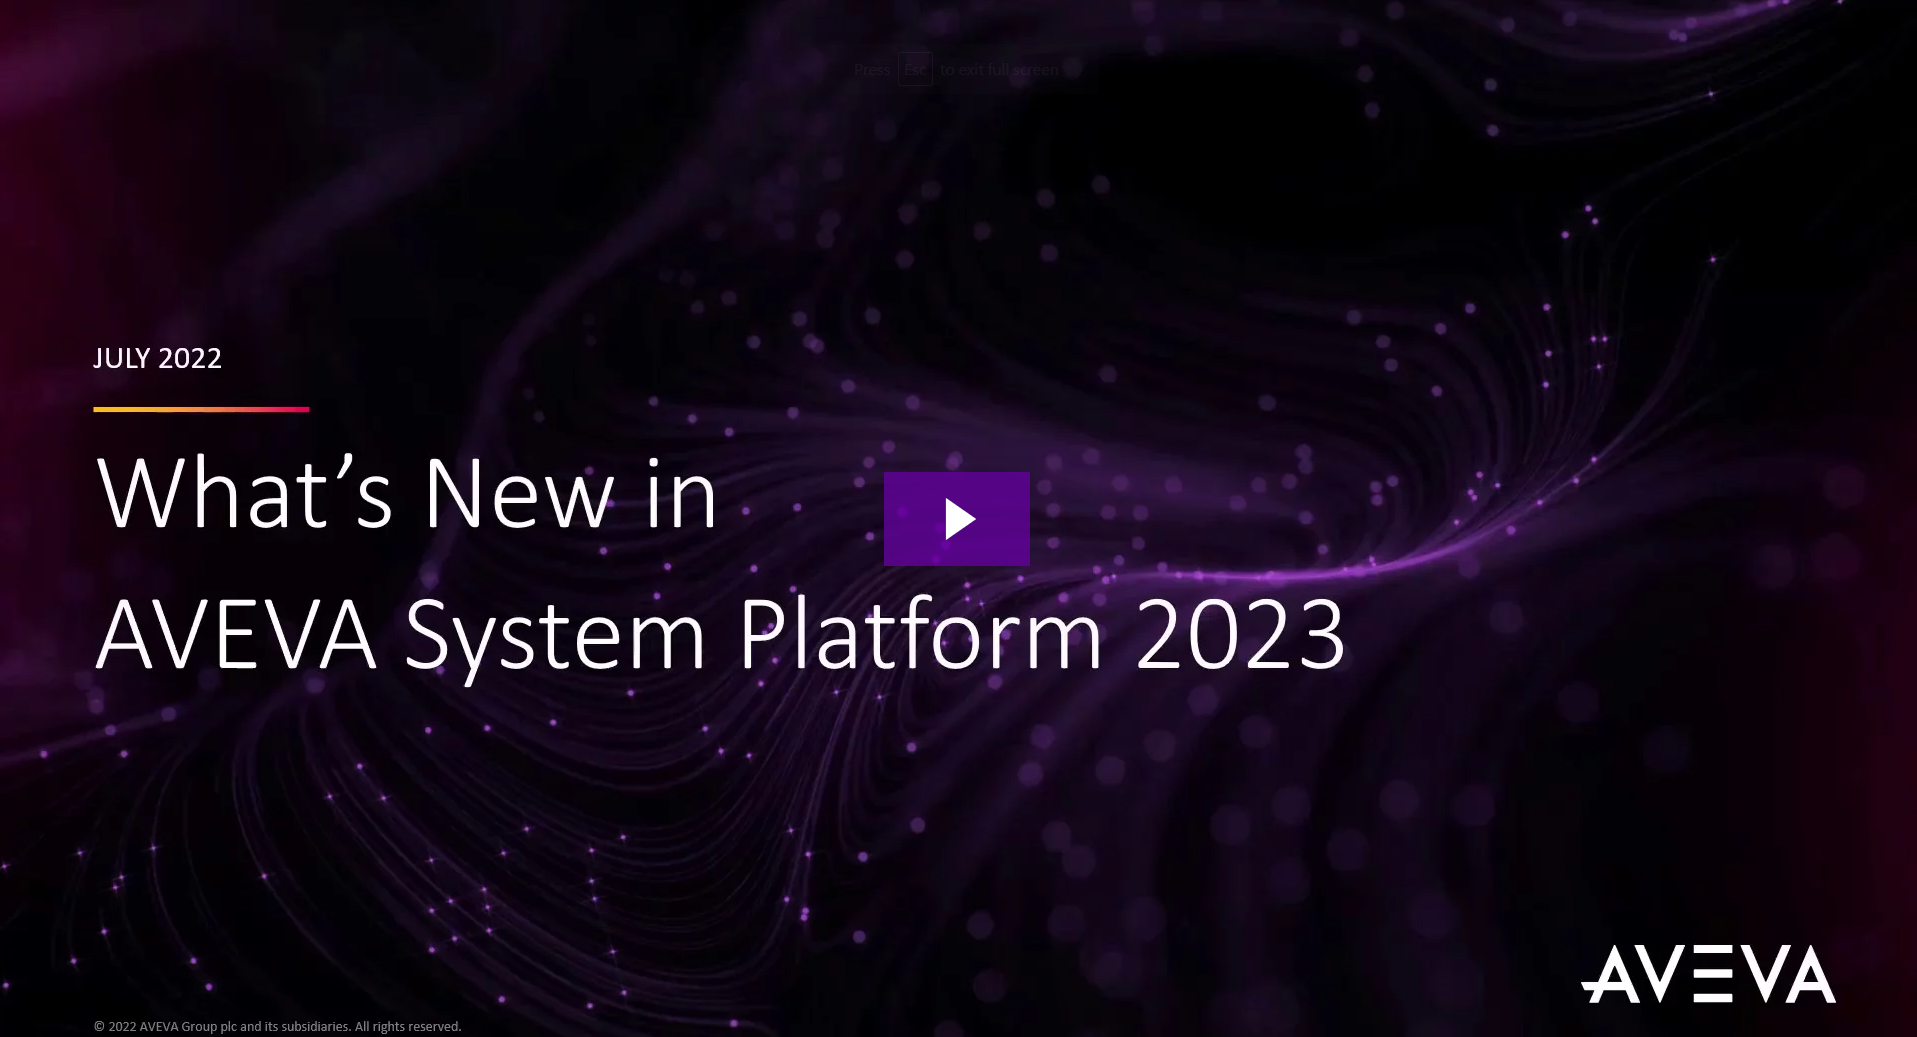 What’s New in AVEVA System Platform 2023